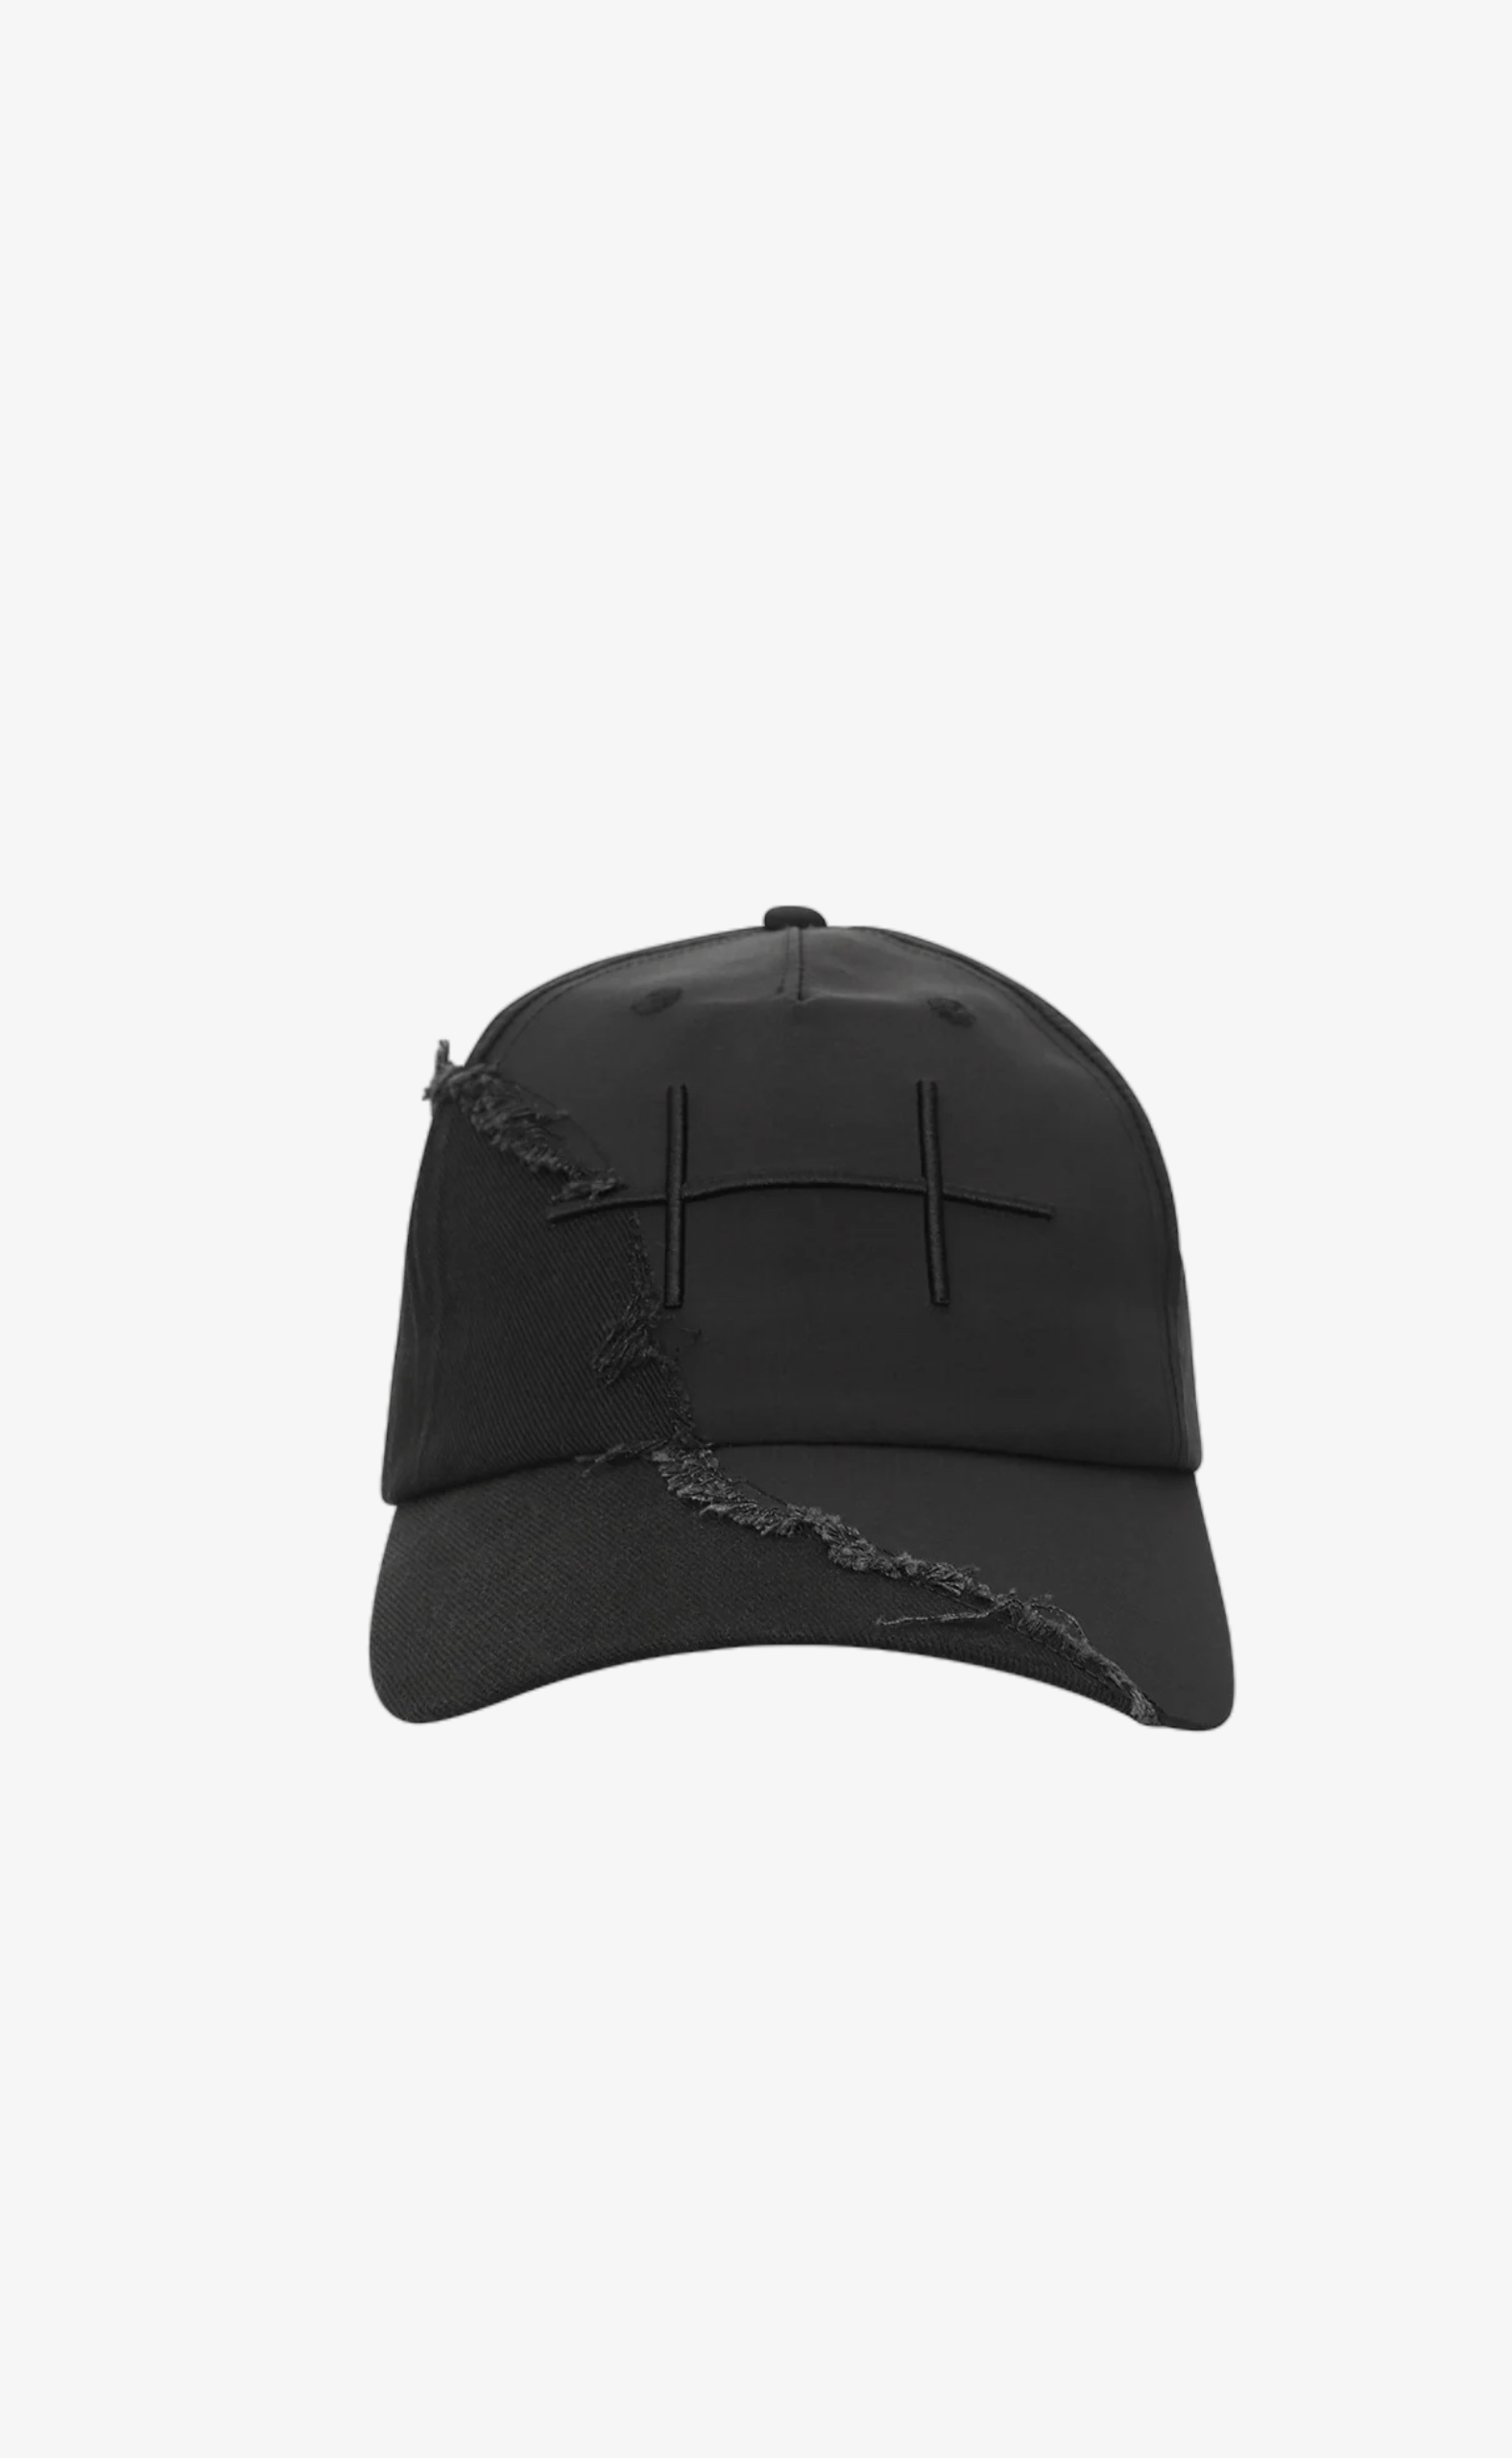 FISSION BLACK HAT